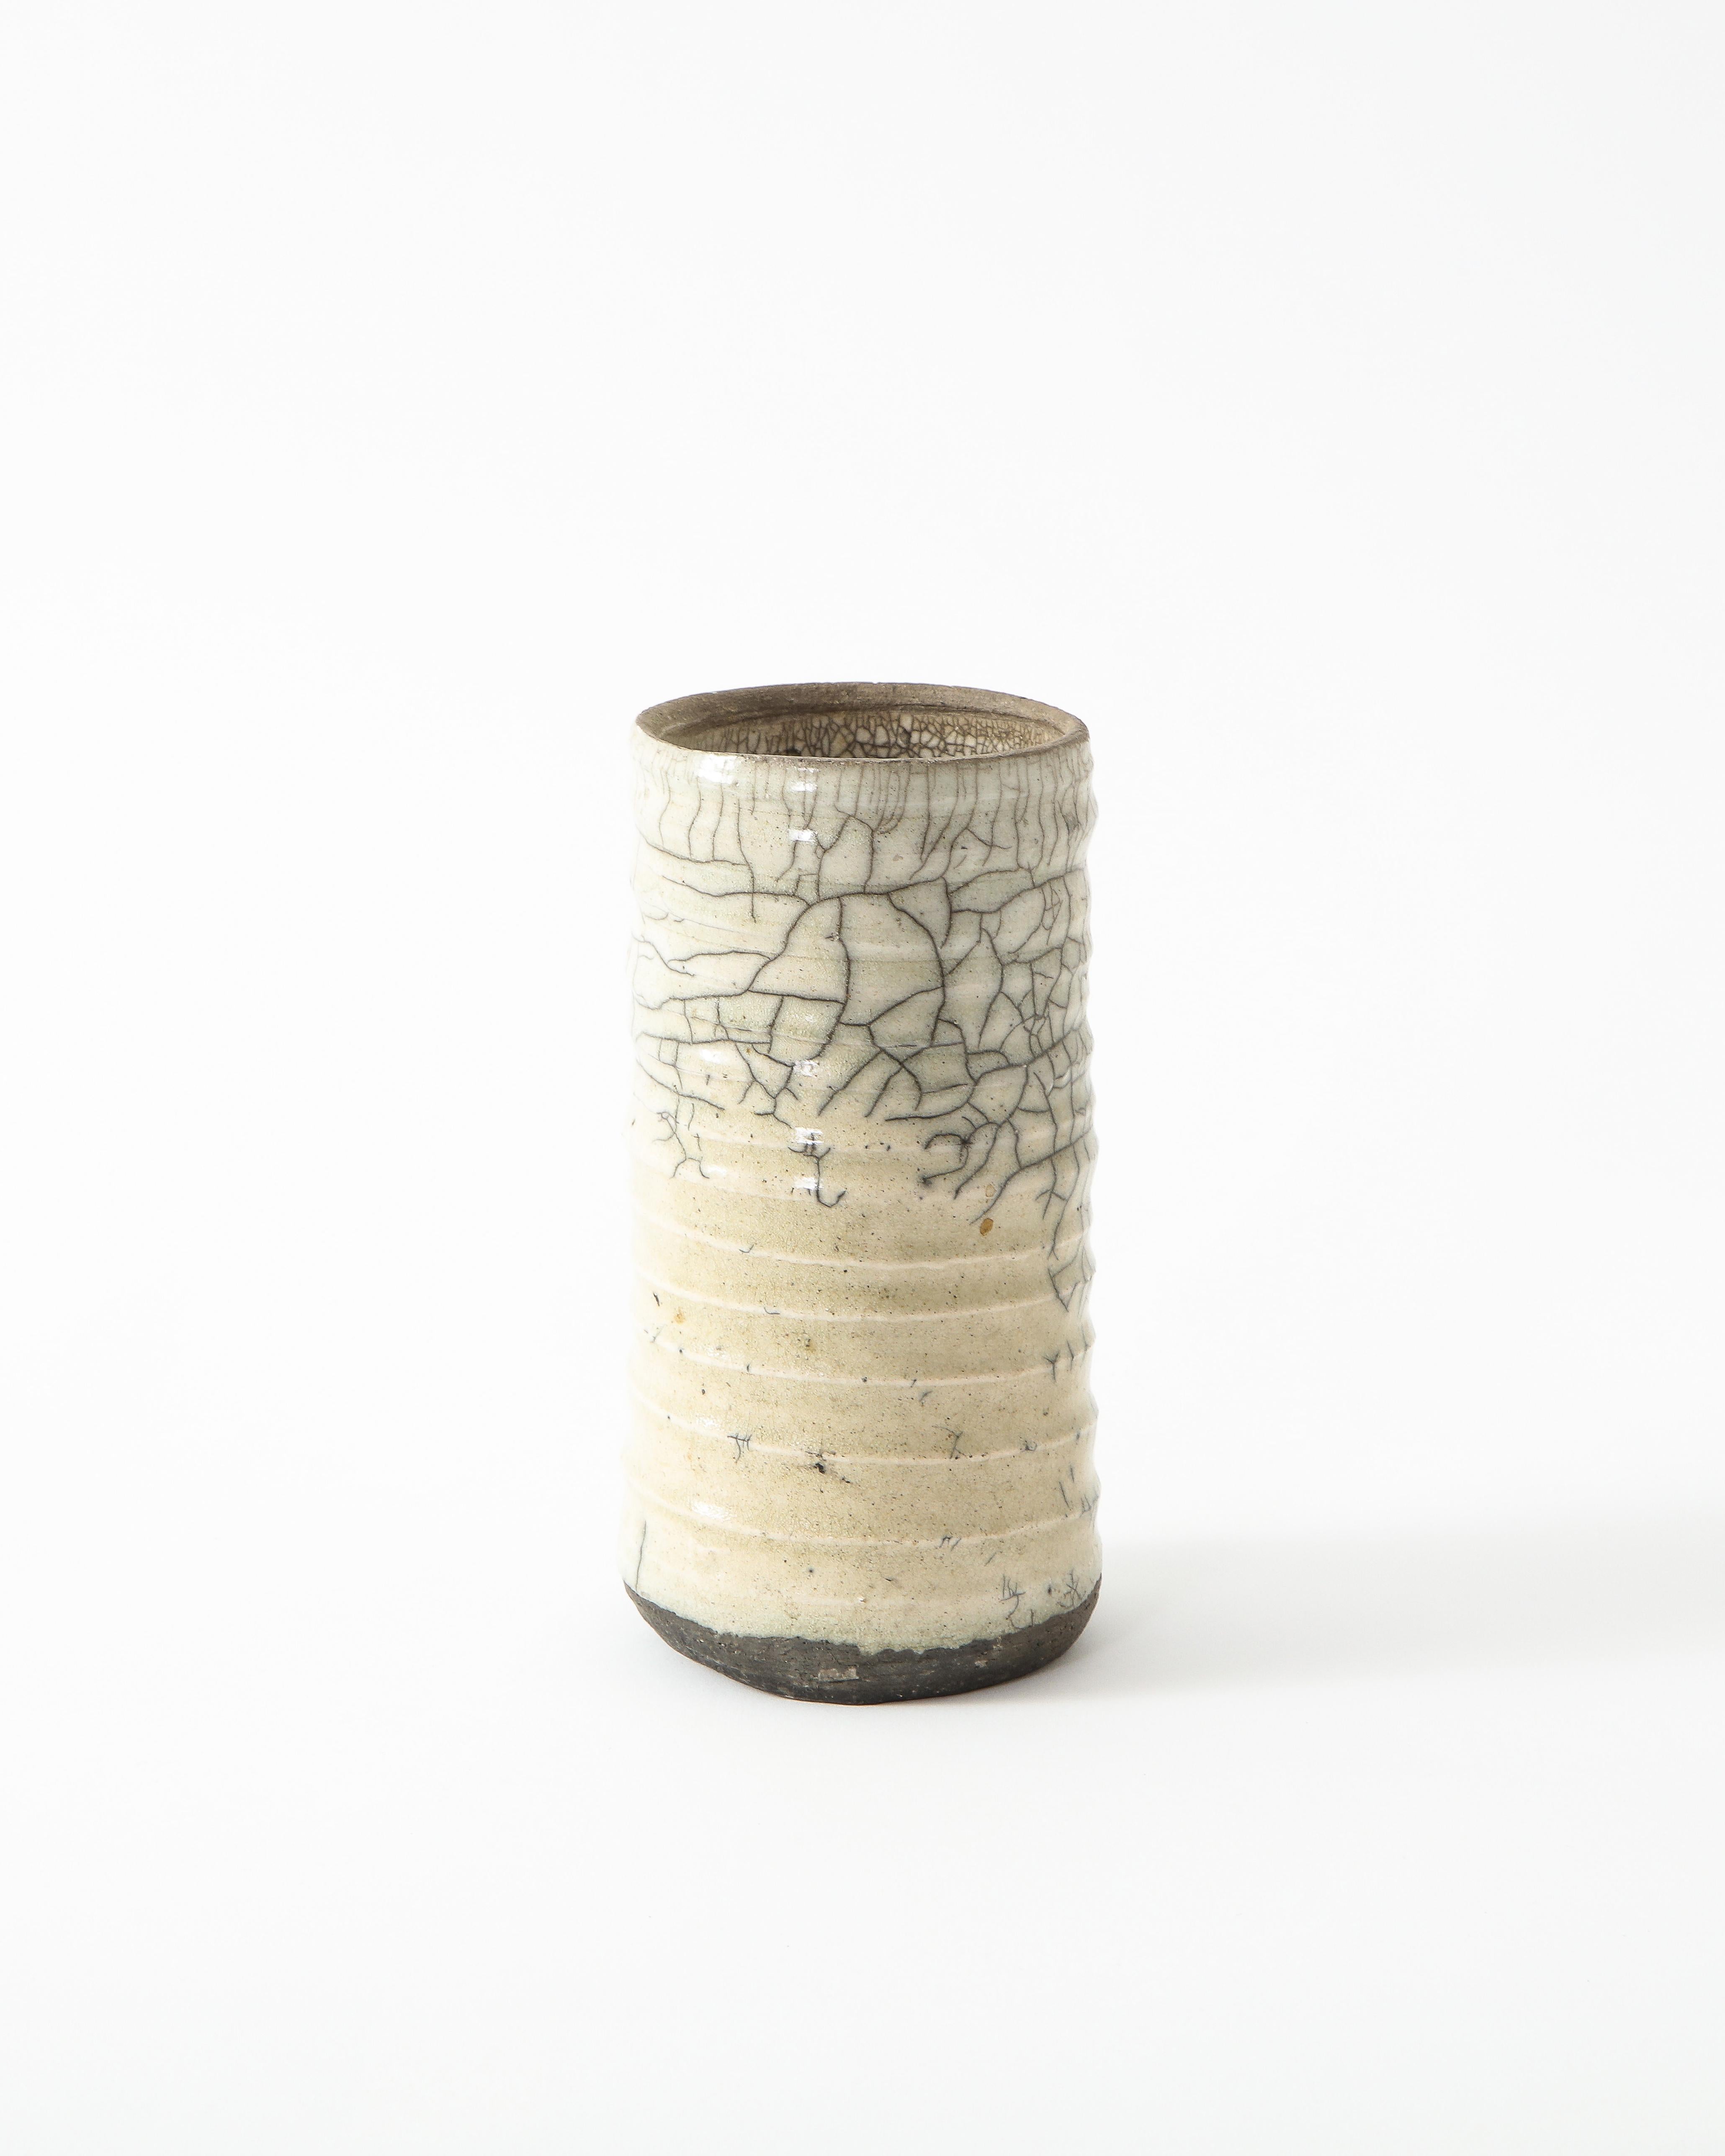 Organic Modern Off-White Ceramic Vase with Intricate Crackling